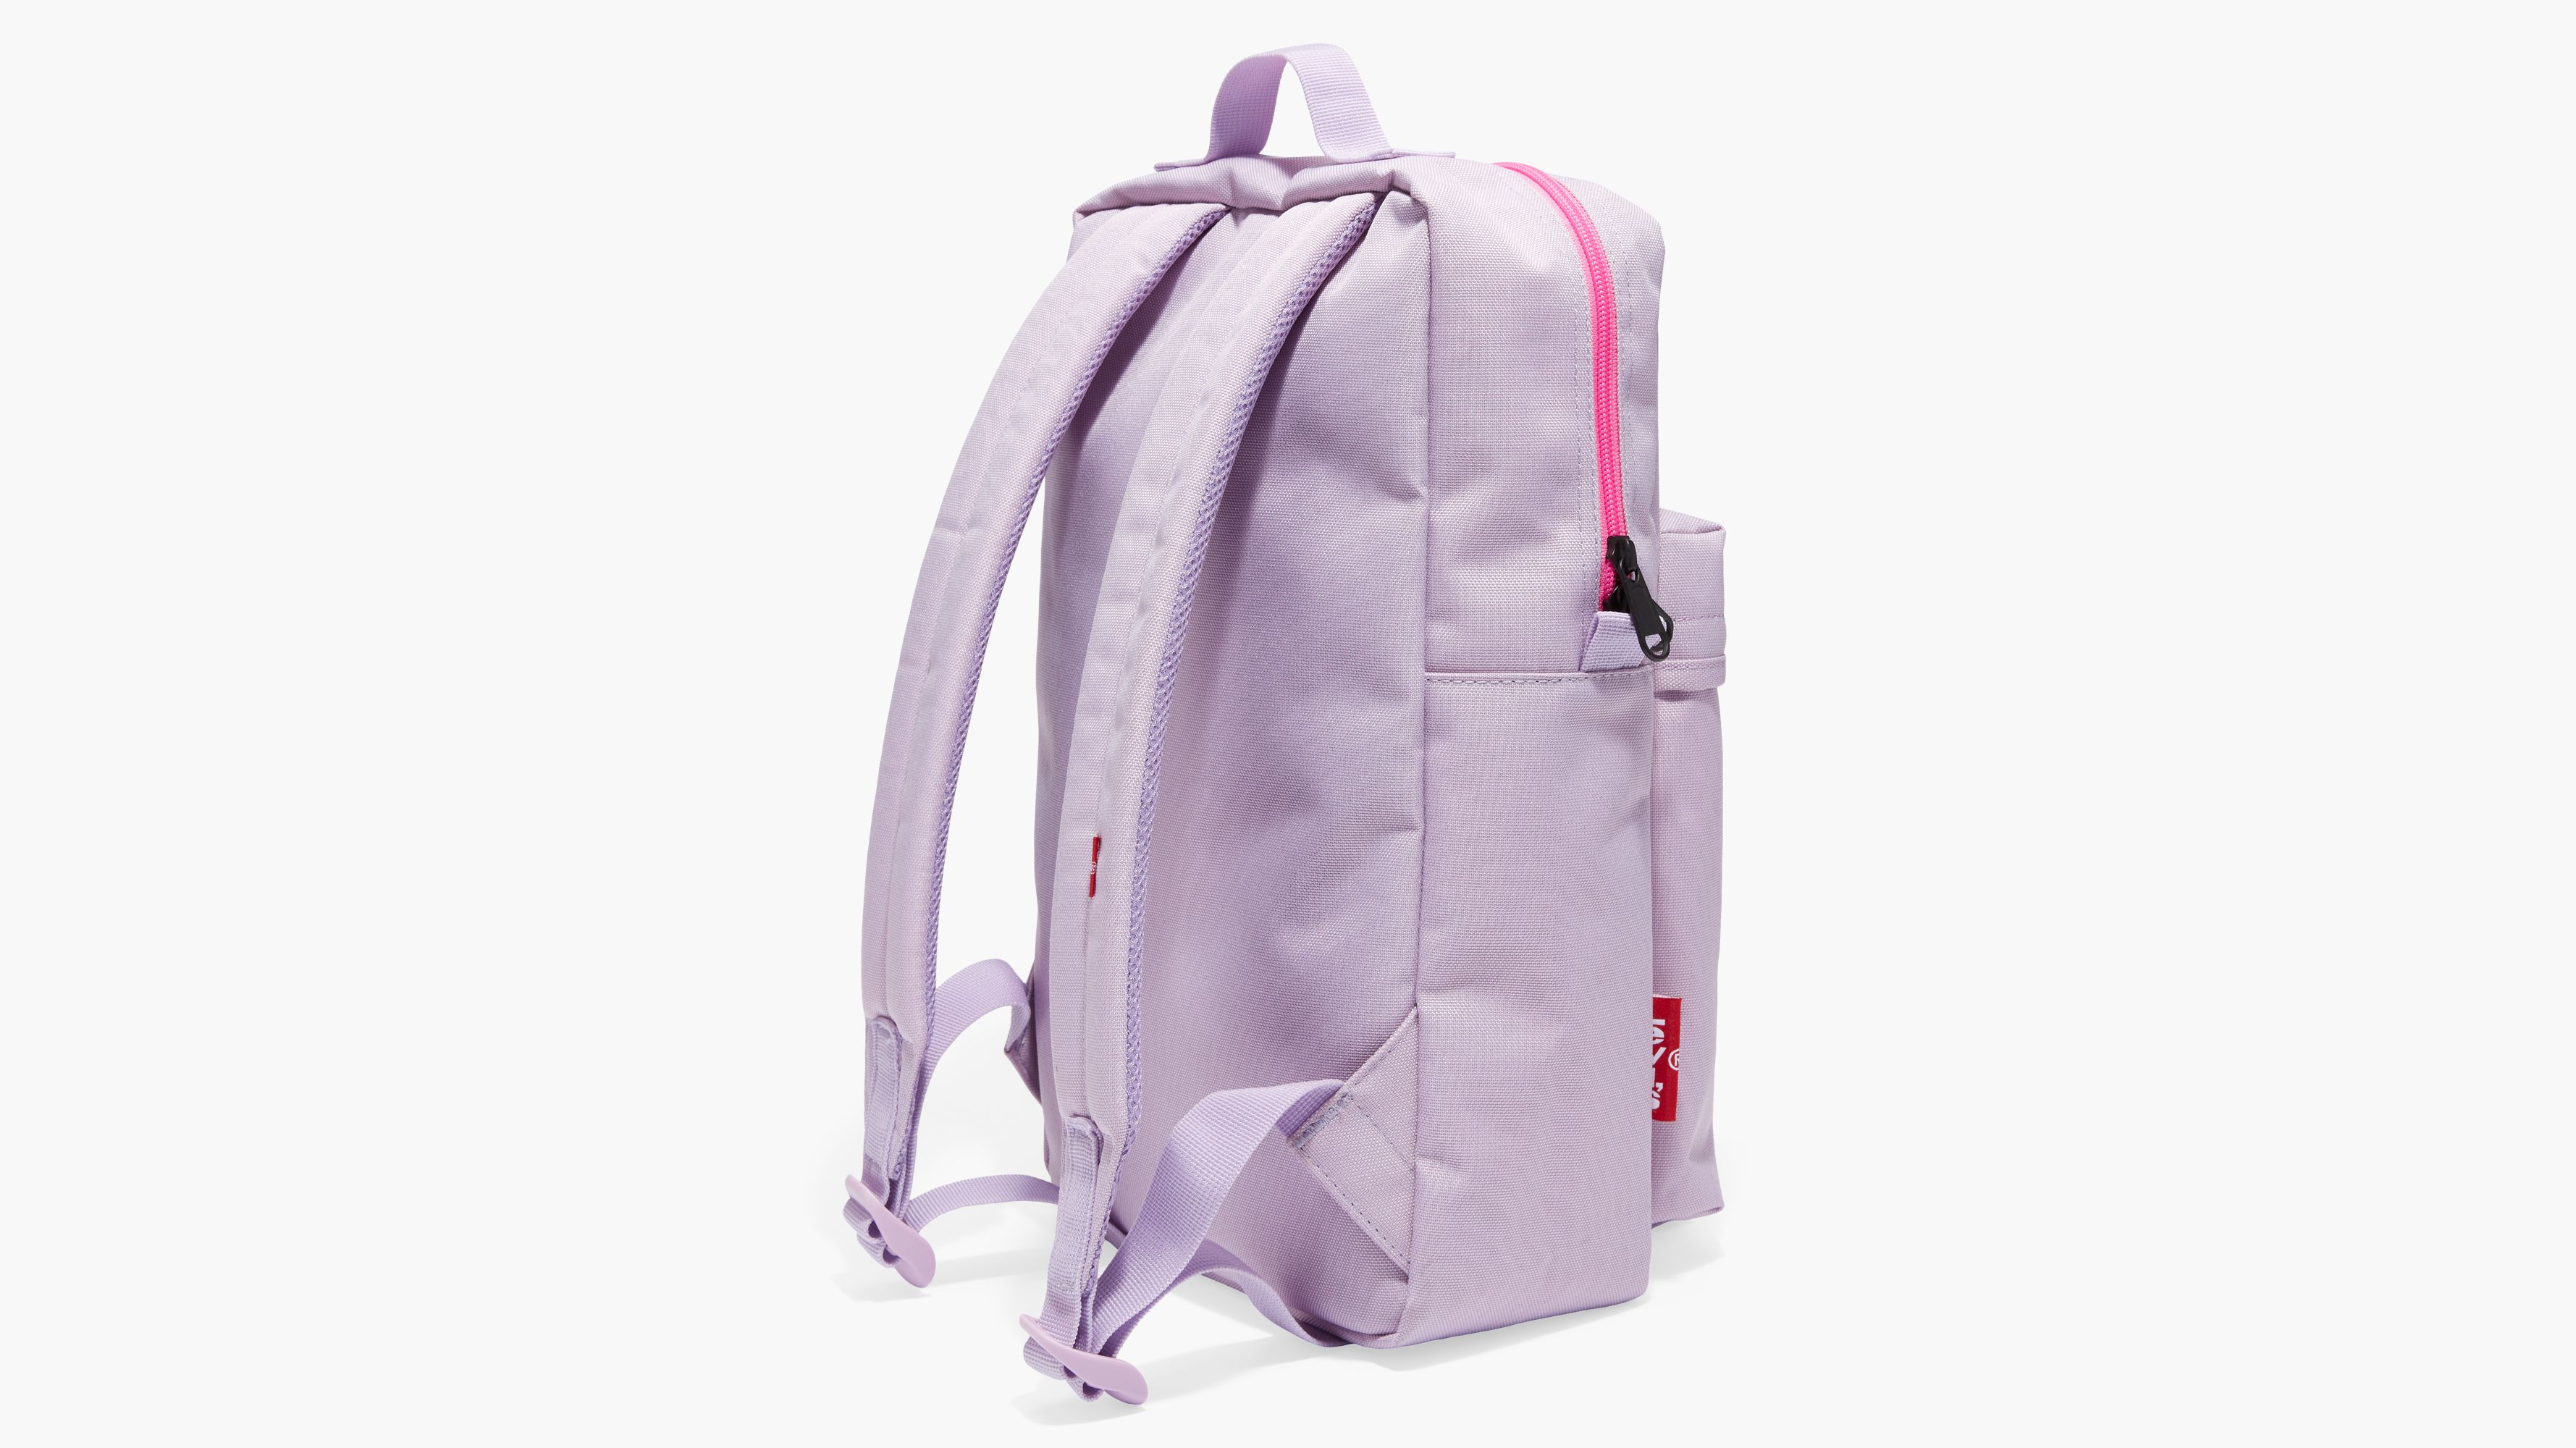 Levi's L-Pack Mini Backpack - Women's - Light Blue One Size